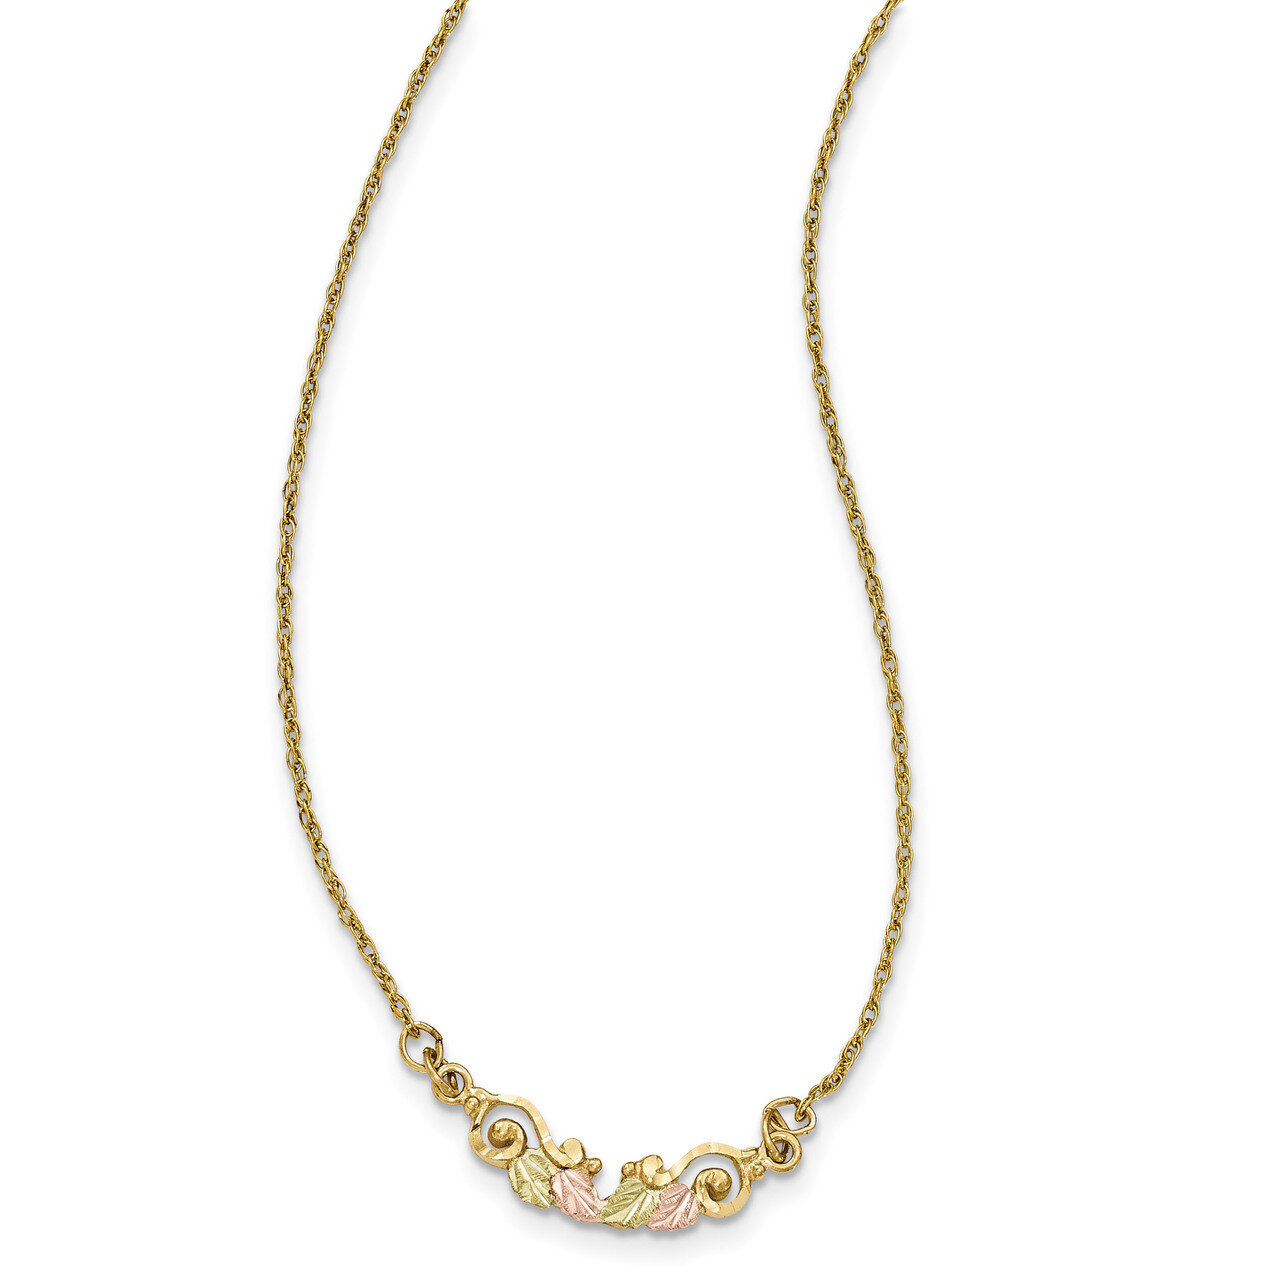 19 Inch Black Hills Gold Necklace 10k Tri-color 10BH631-19